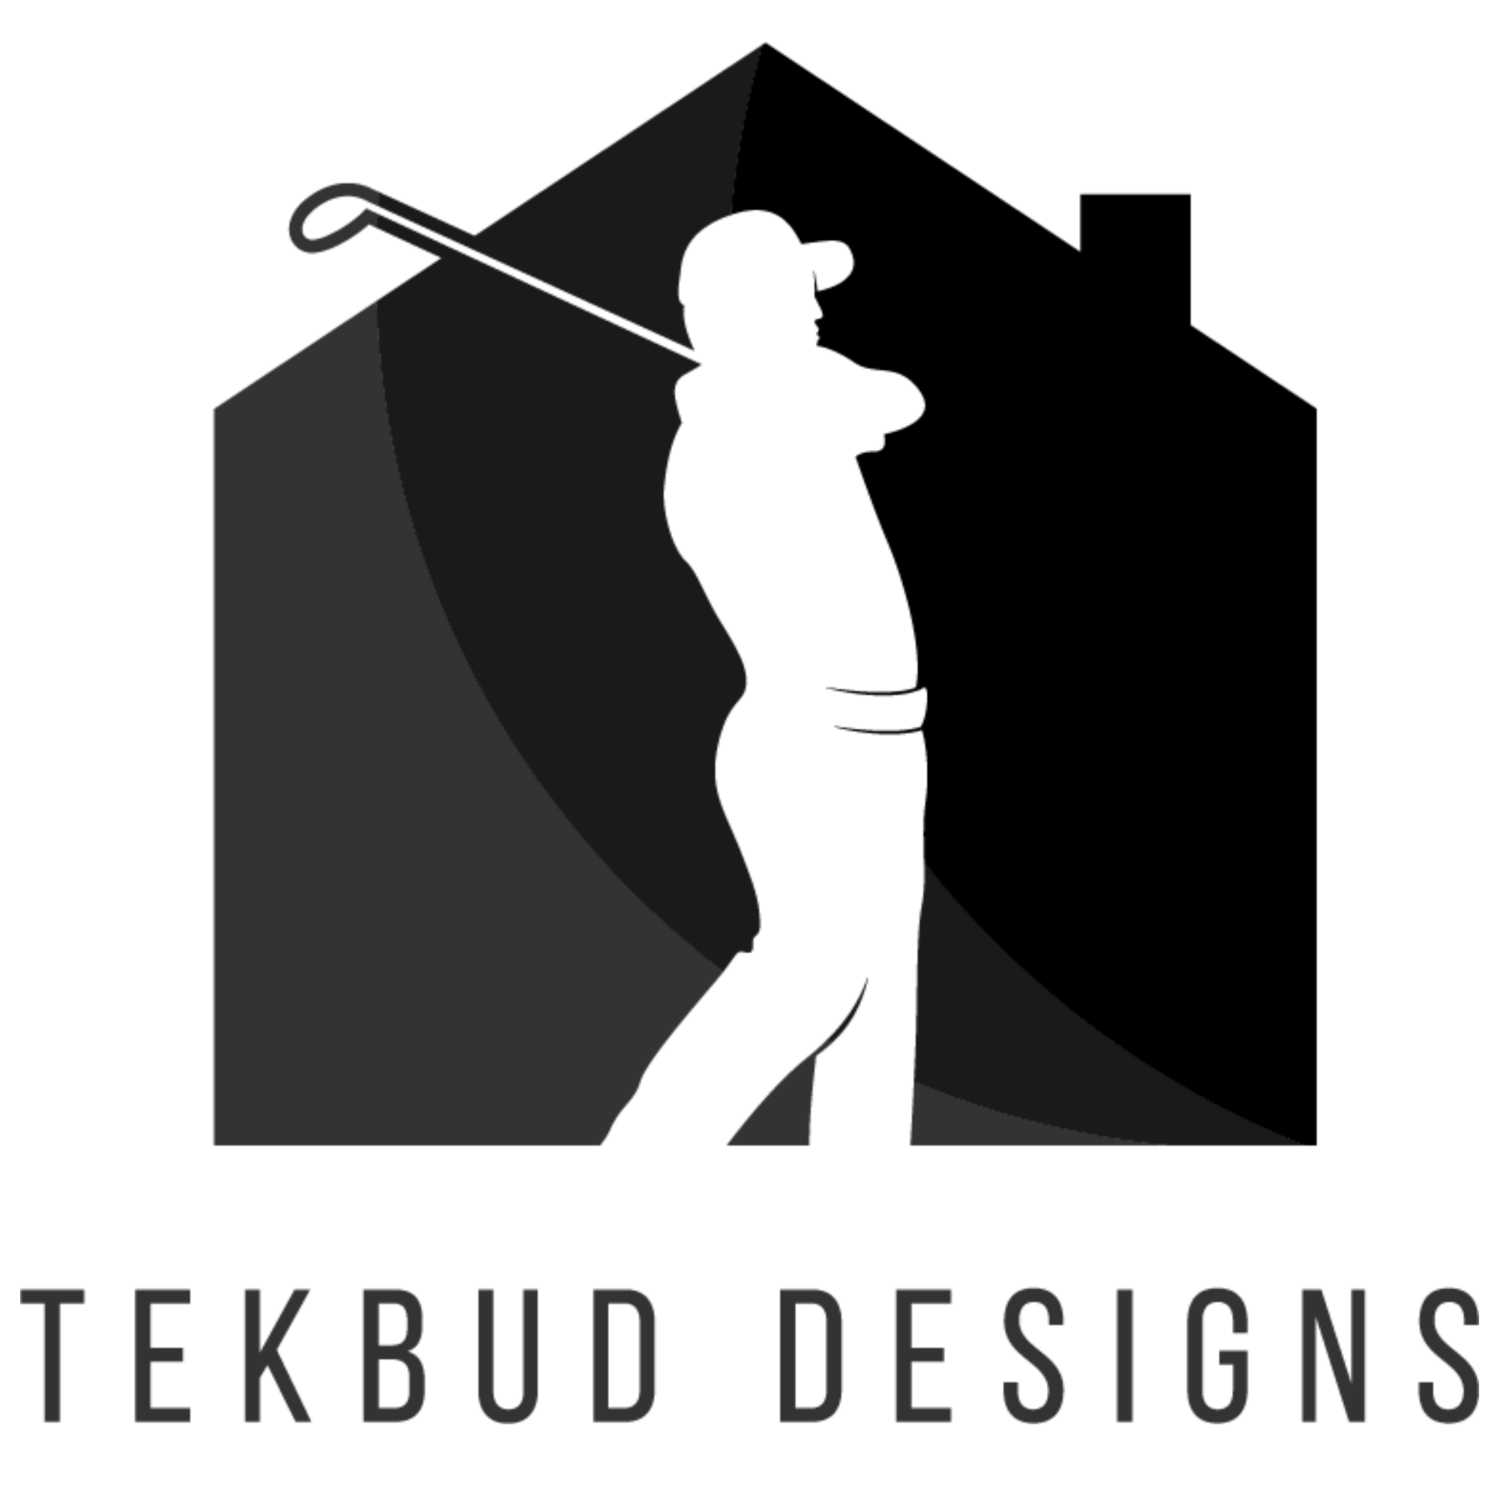 Tekbud designs - Indoor golf course designs for GSPro golf simulator software